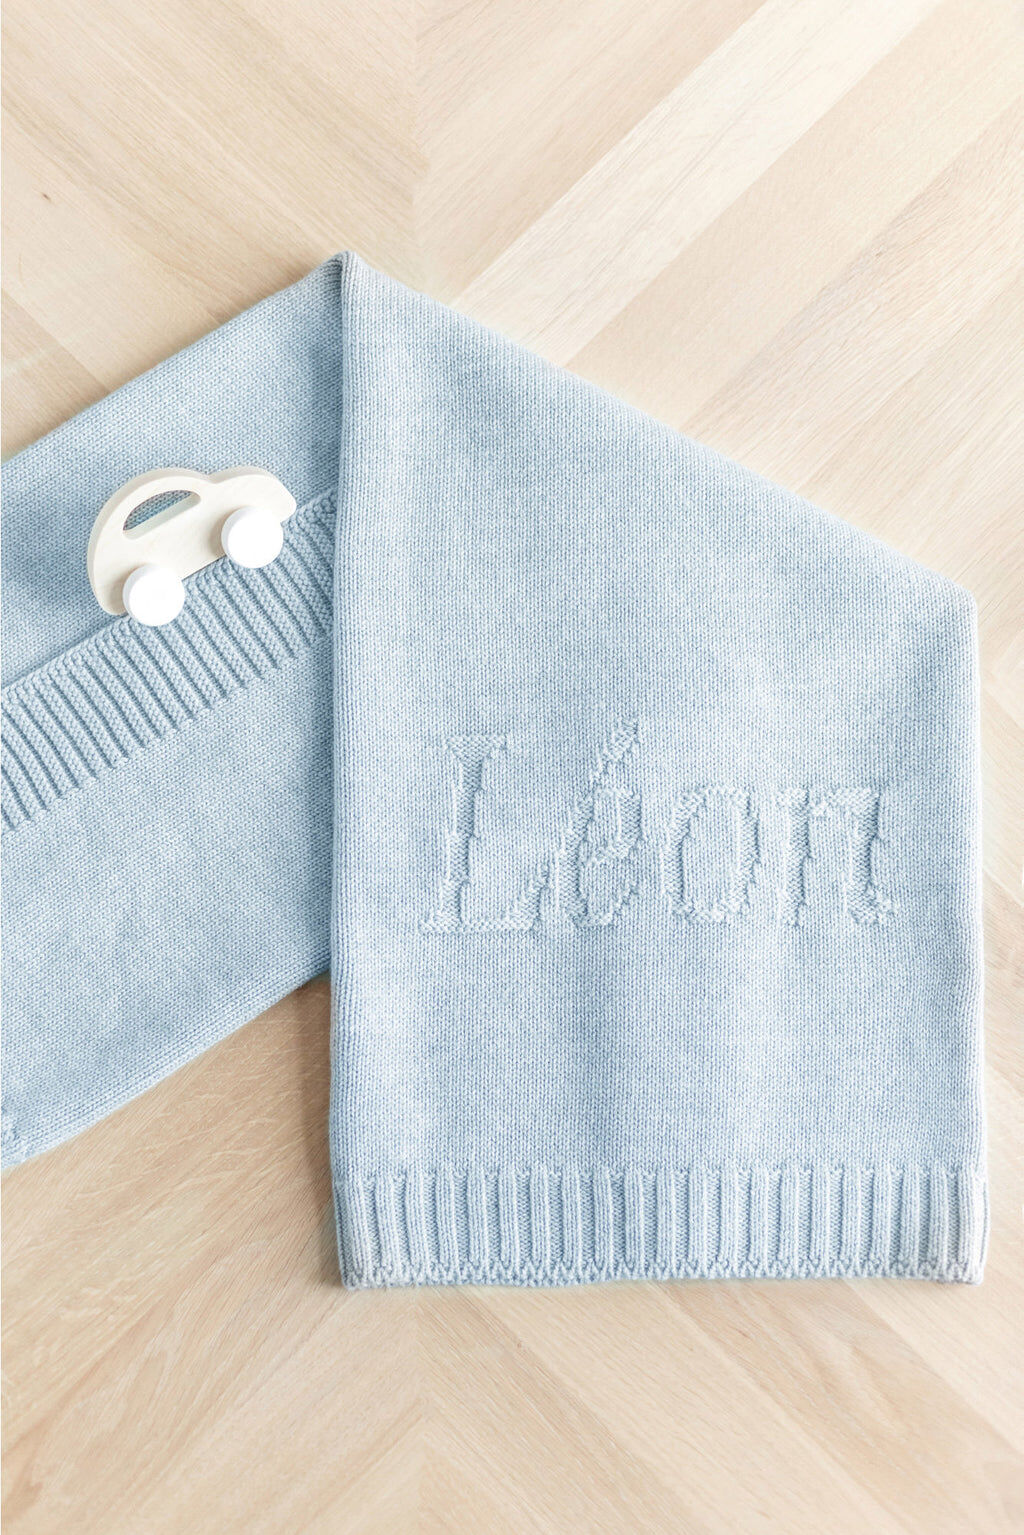 Blanket Personalized - Wool Sky blue